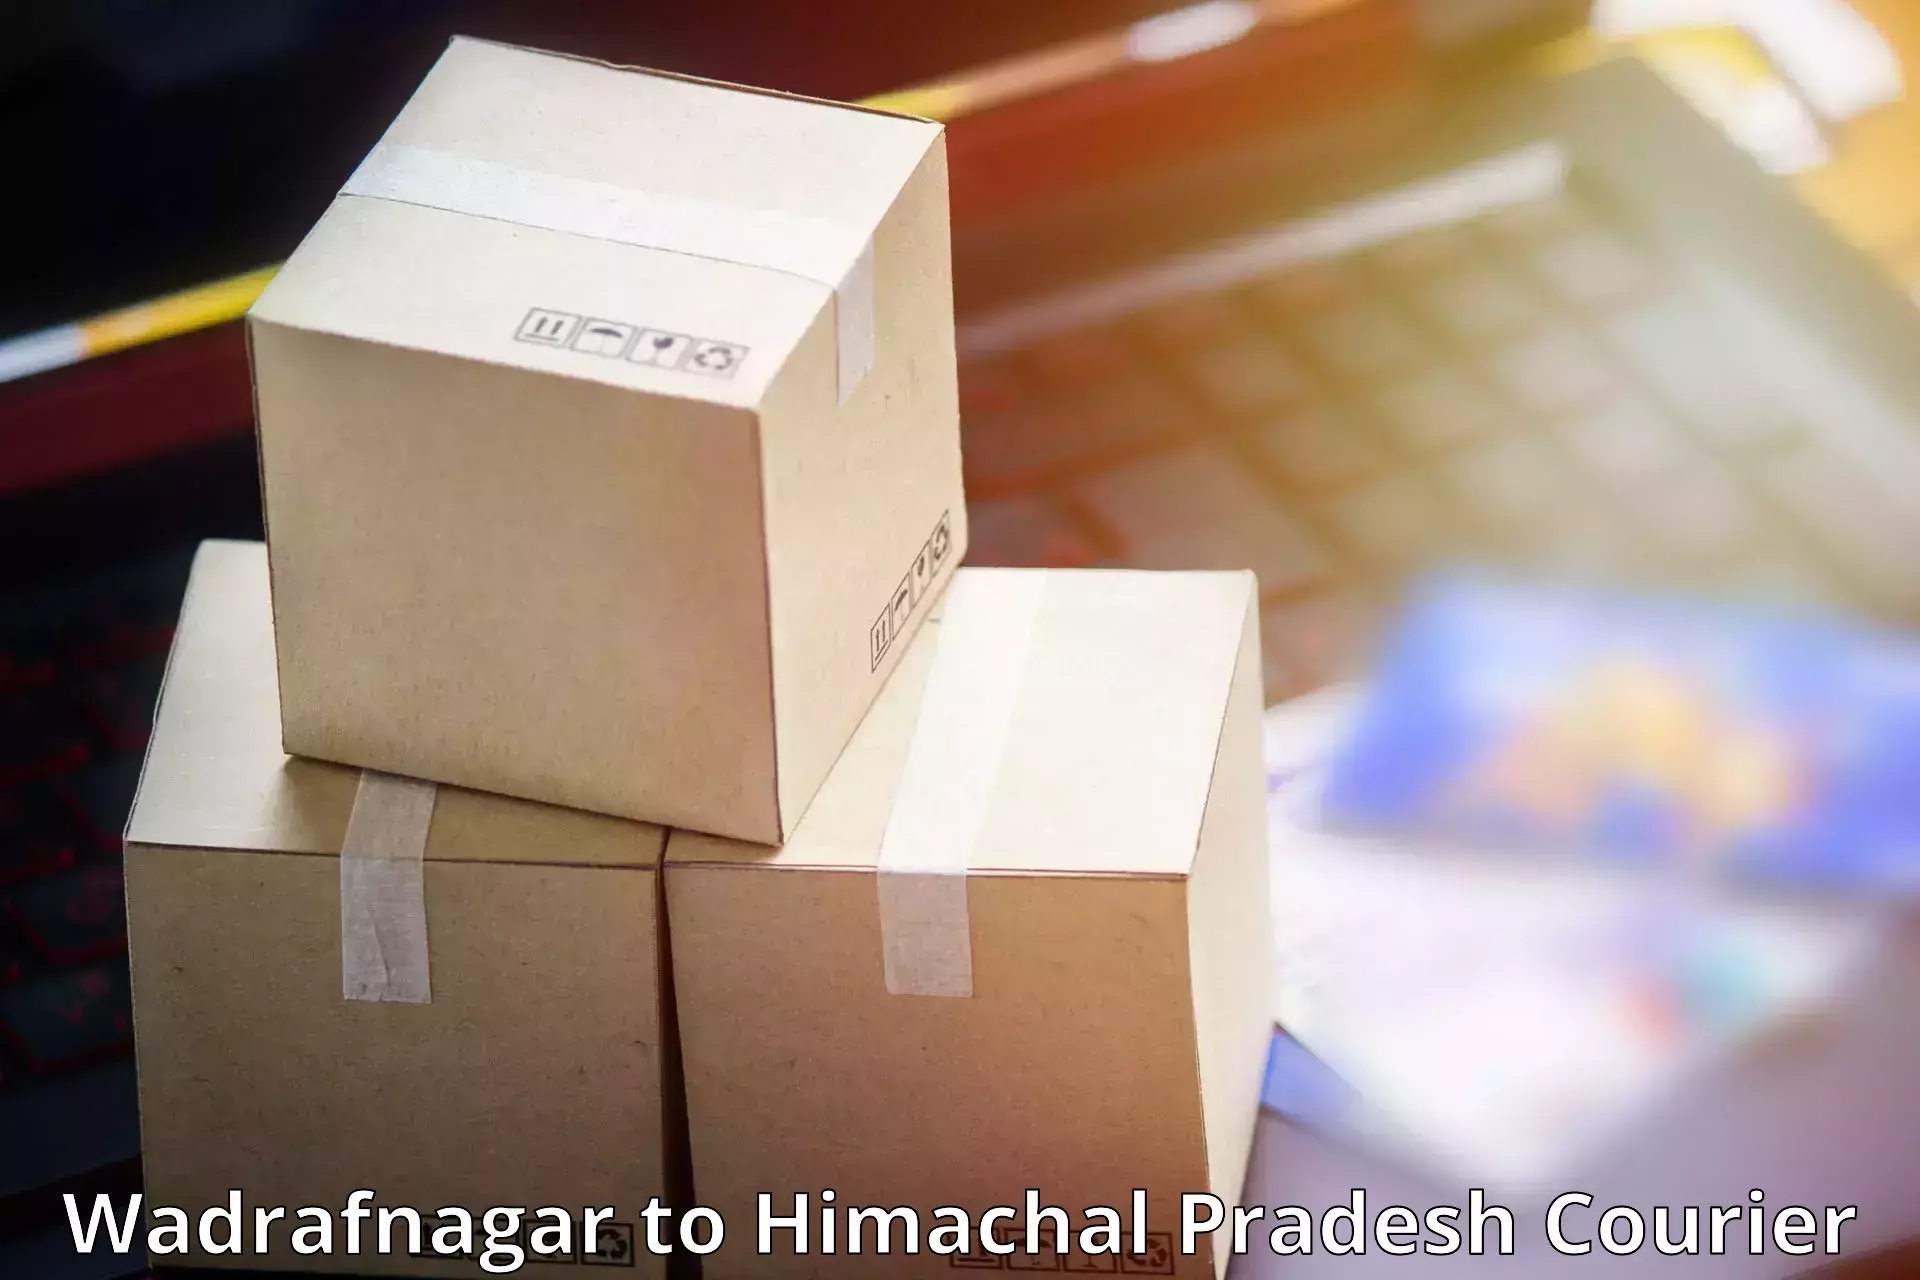 Cargo delivery service Wadrafnagar to Chopal